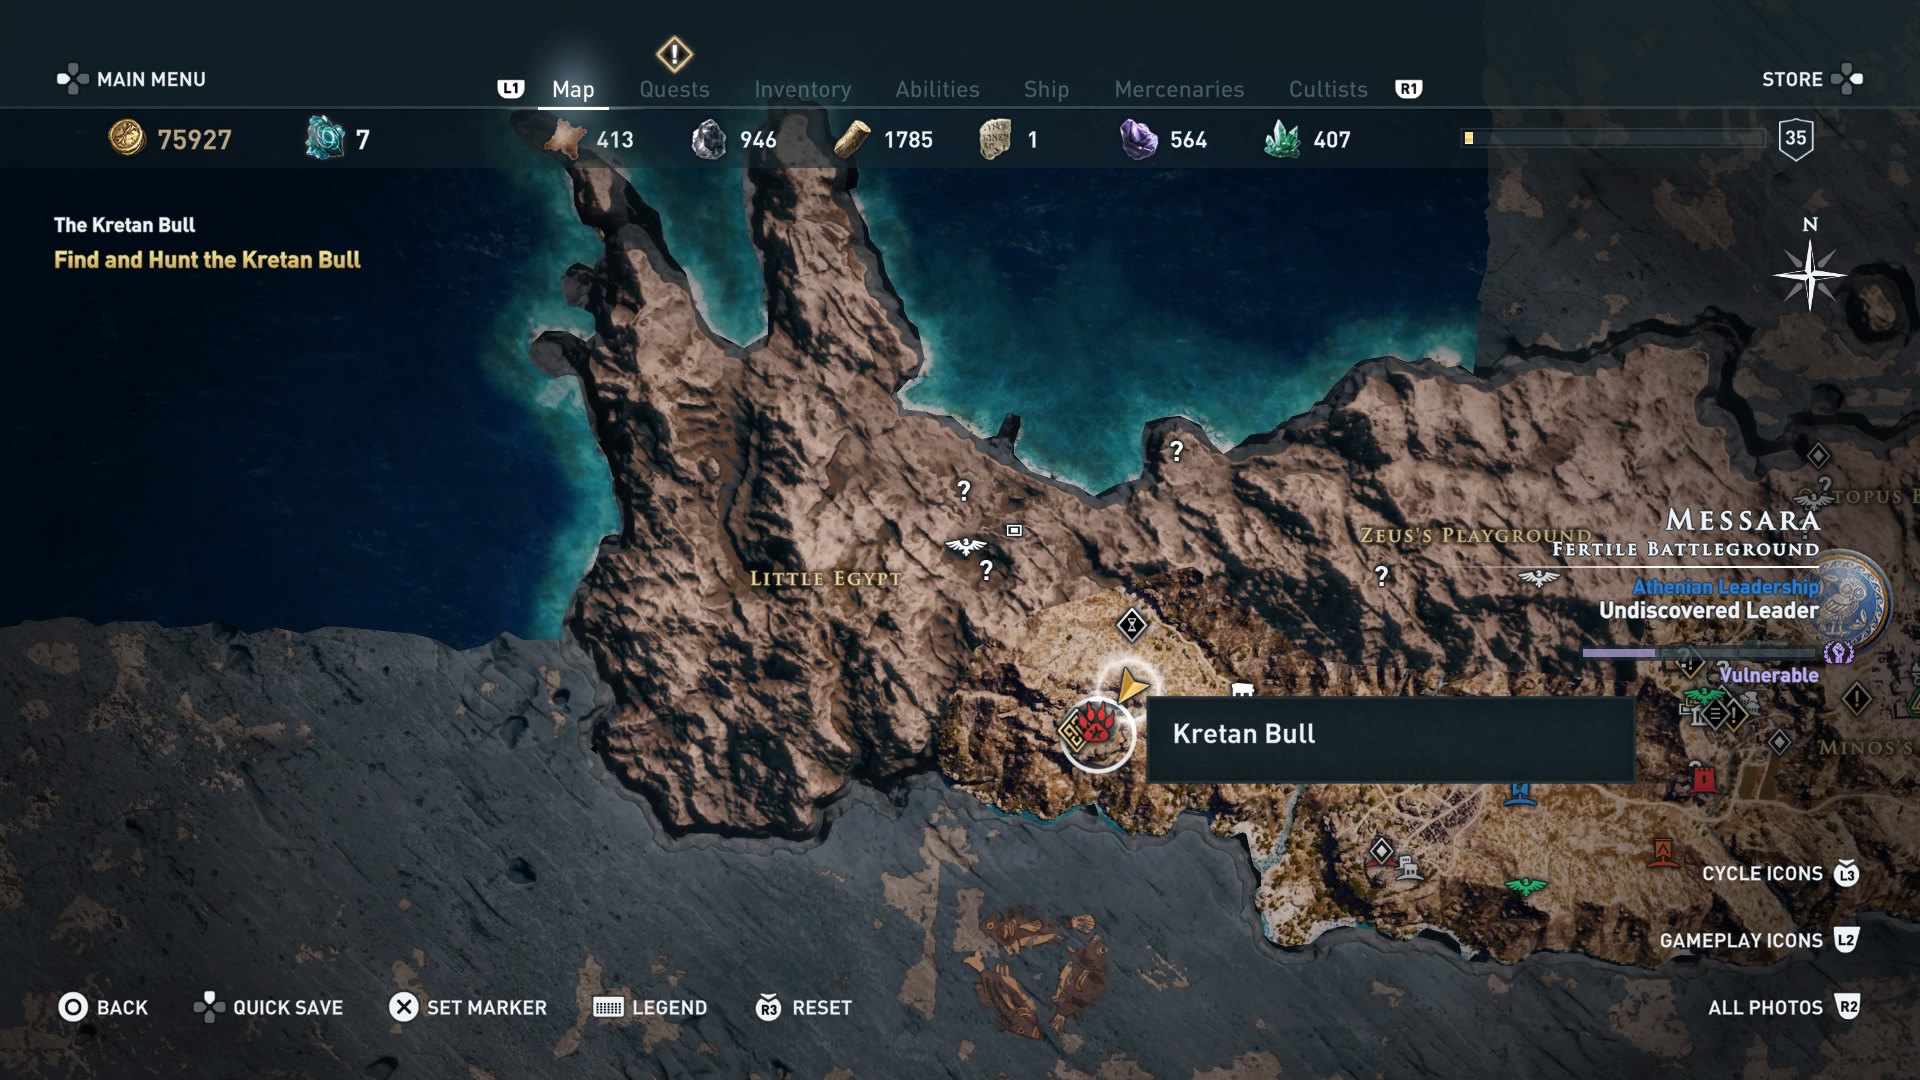 Assassin's Creed Odyssey: The Kretan Bull location